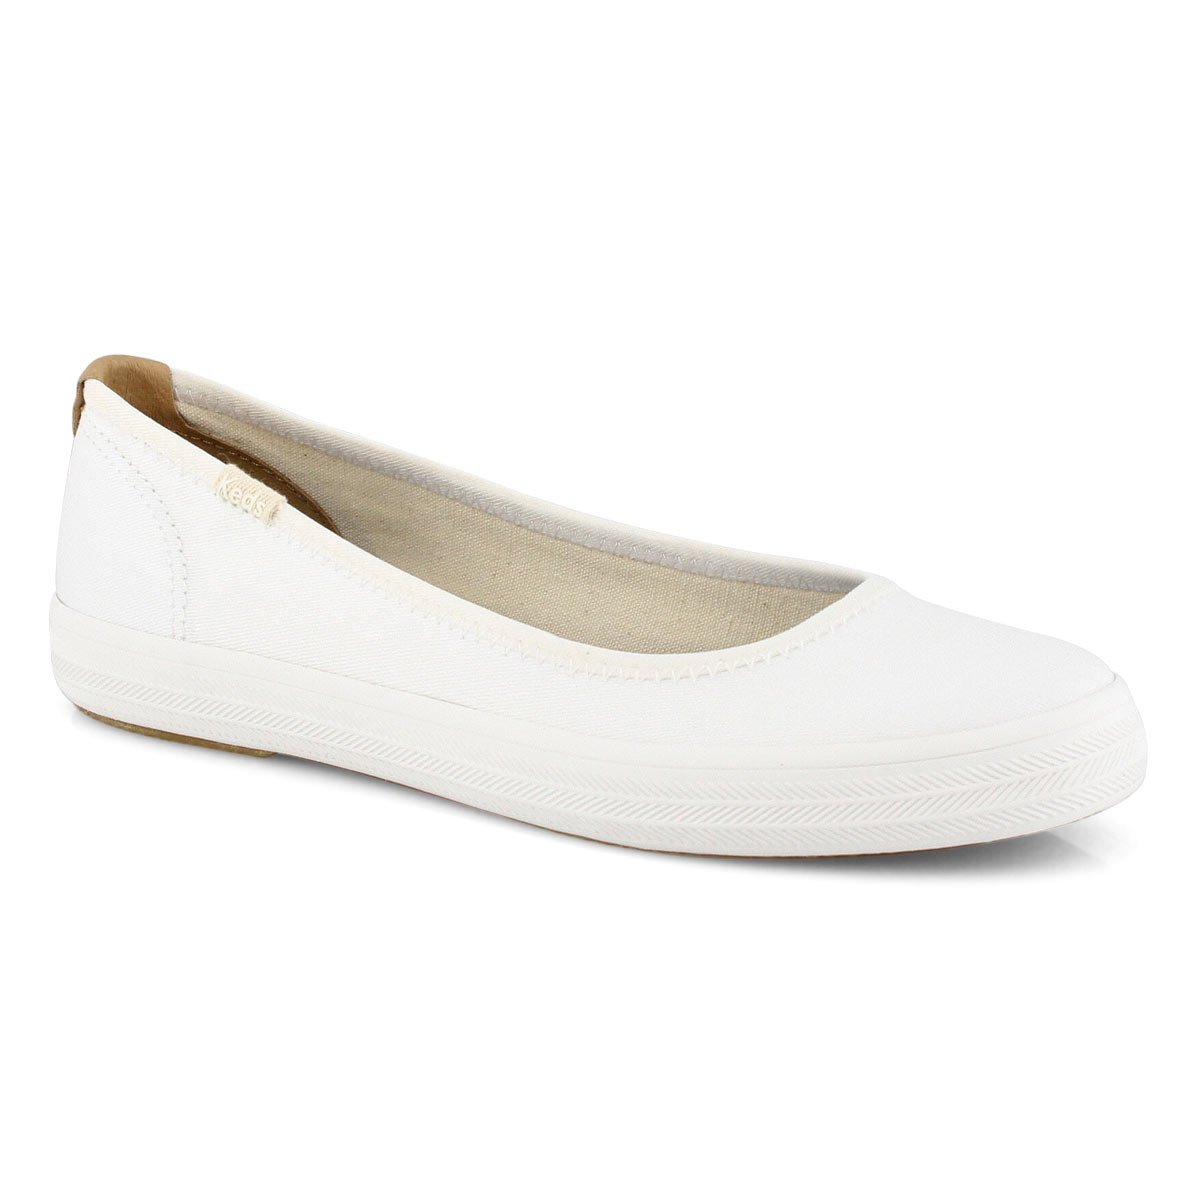 Keds Women's Bryn Casual Shoe - White | SoftMoc.com